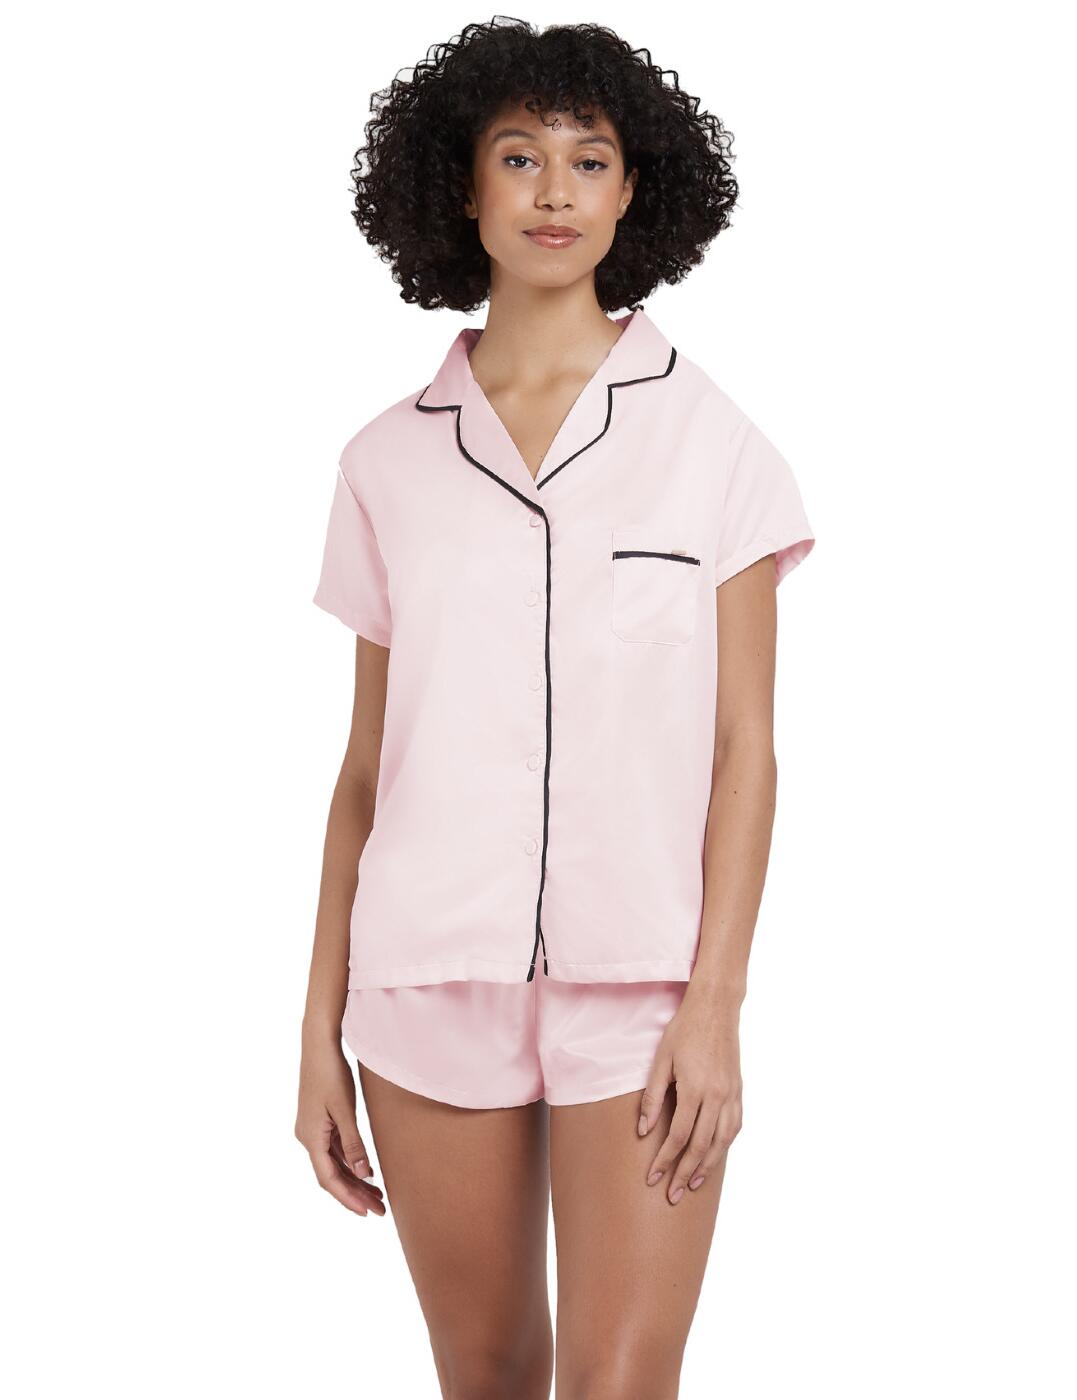 Bluebella Abigail Shirt and Short Set Pale Pink/Black 